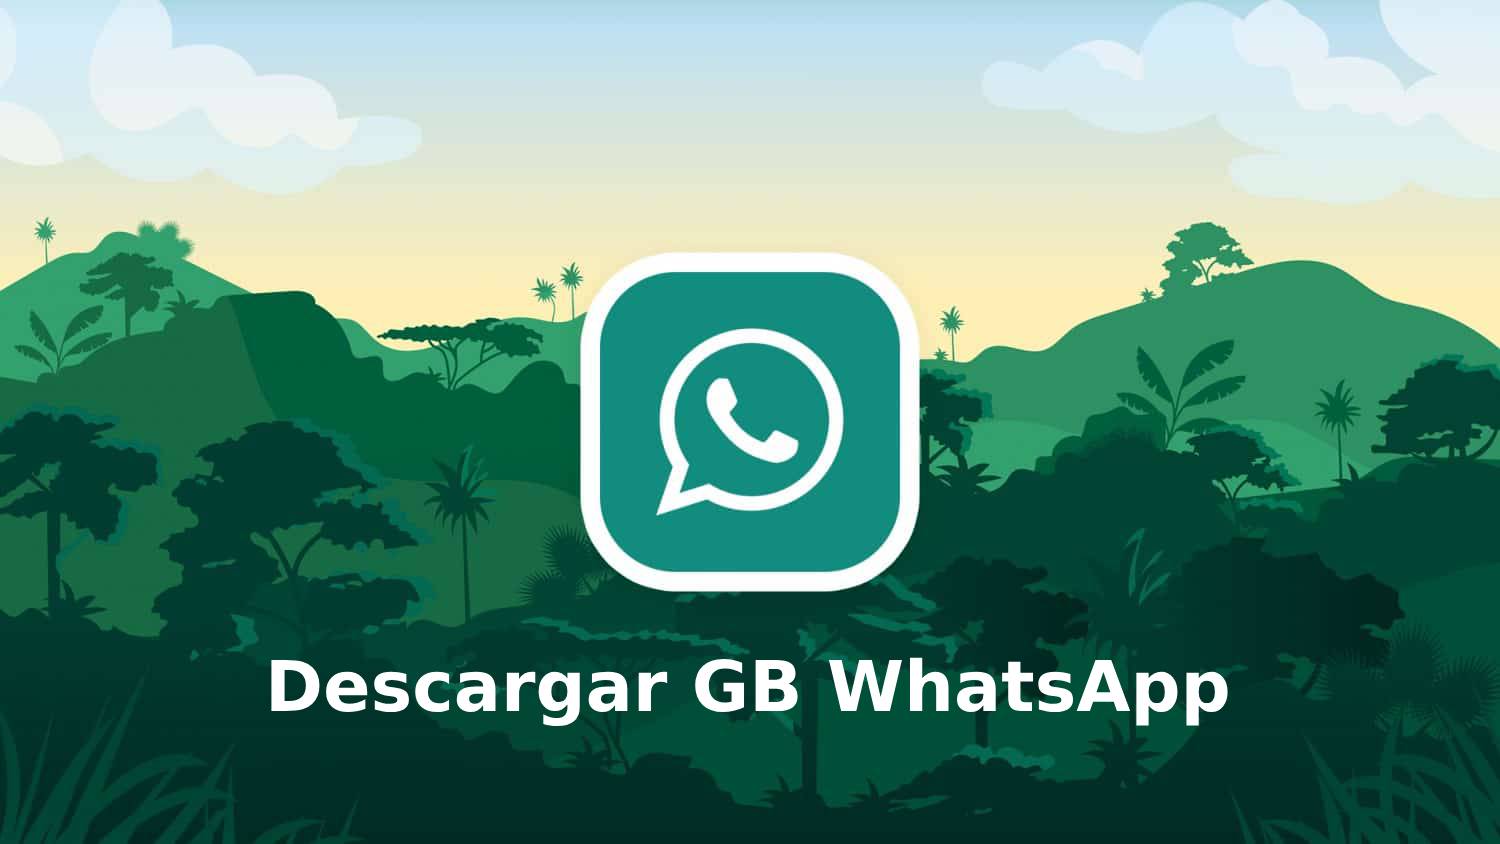 Descarga e instala GB WhatsApp V15.60